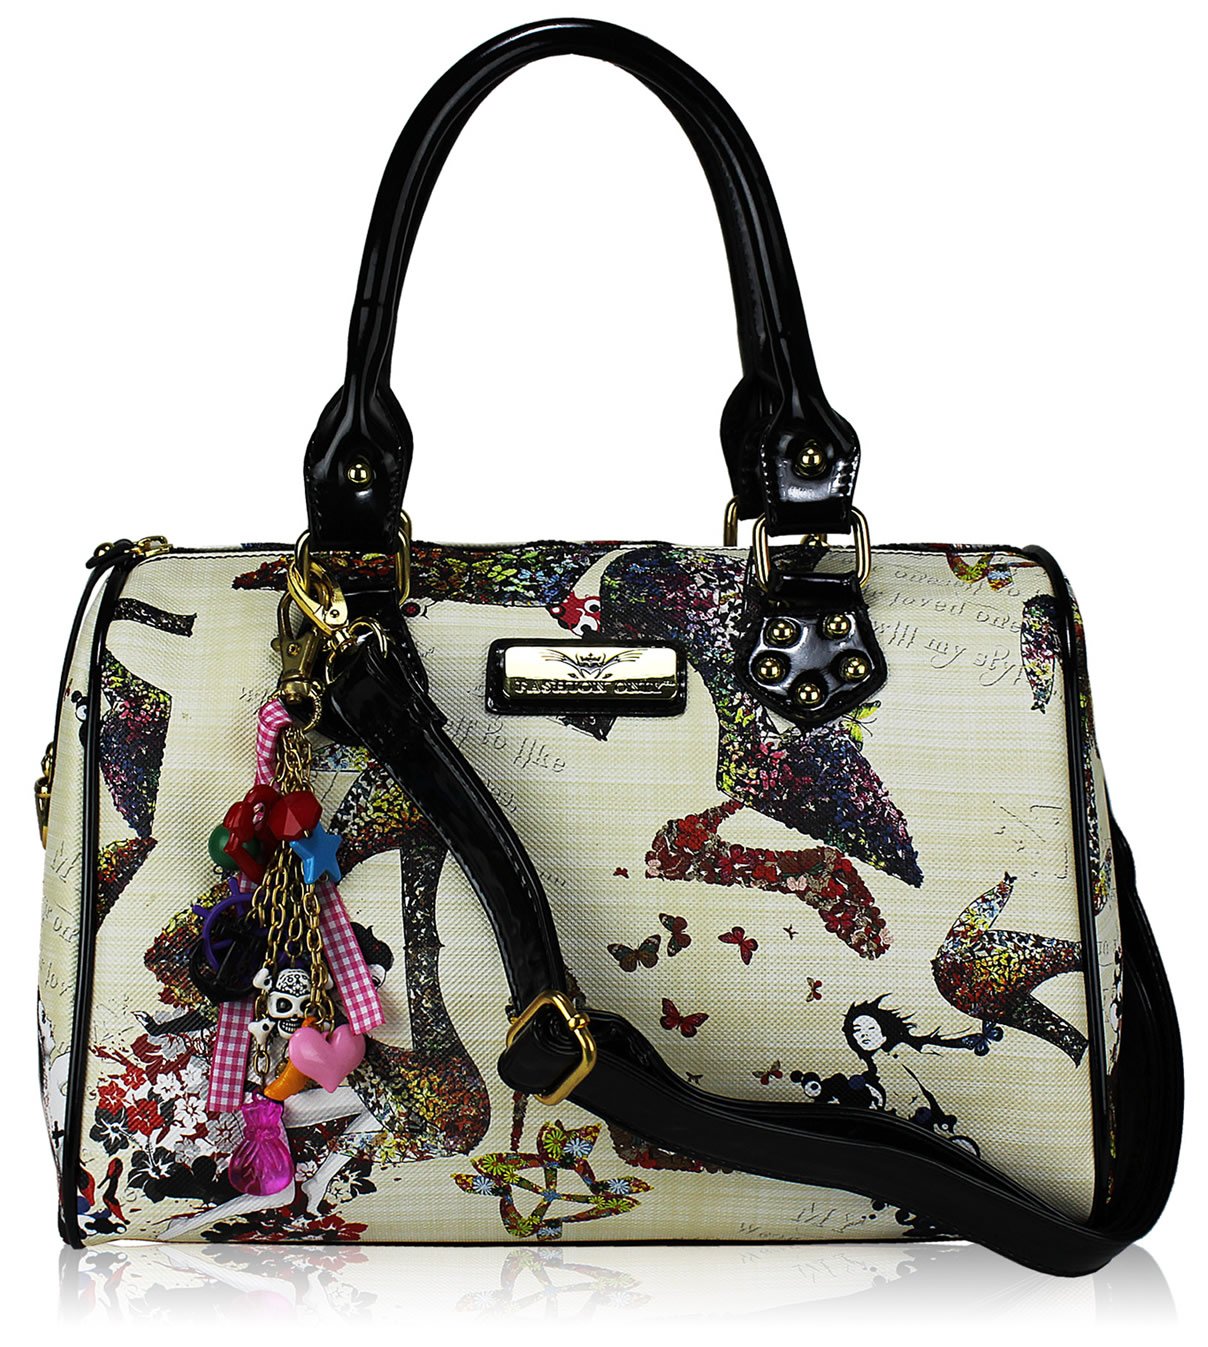 Wholesale bag - Beige Fashion Tote Bag With Charm